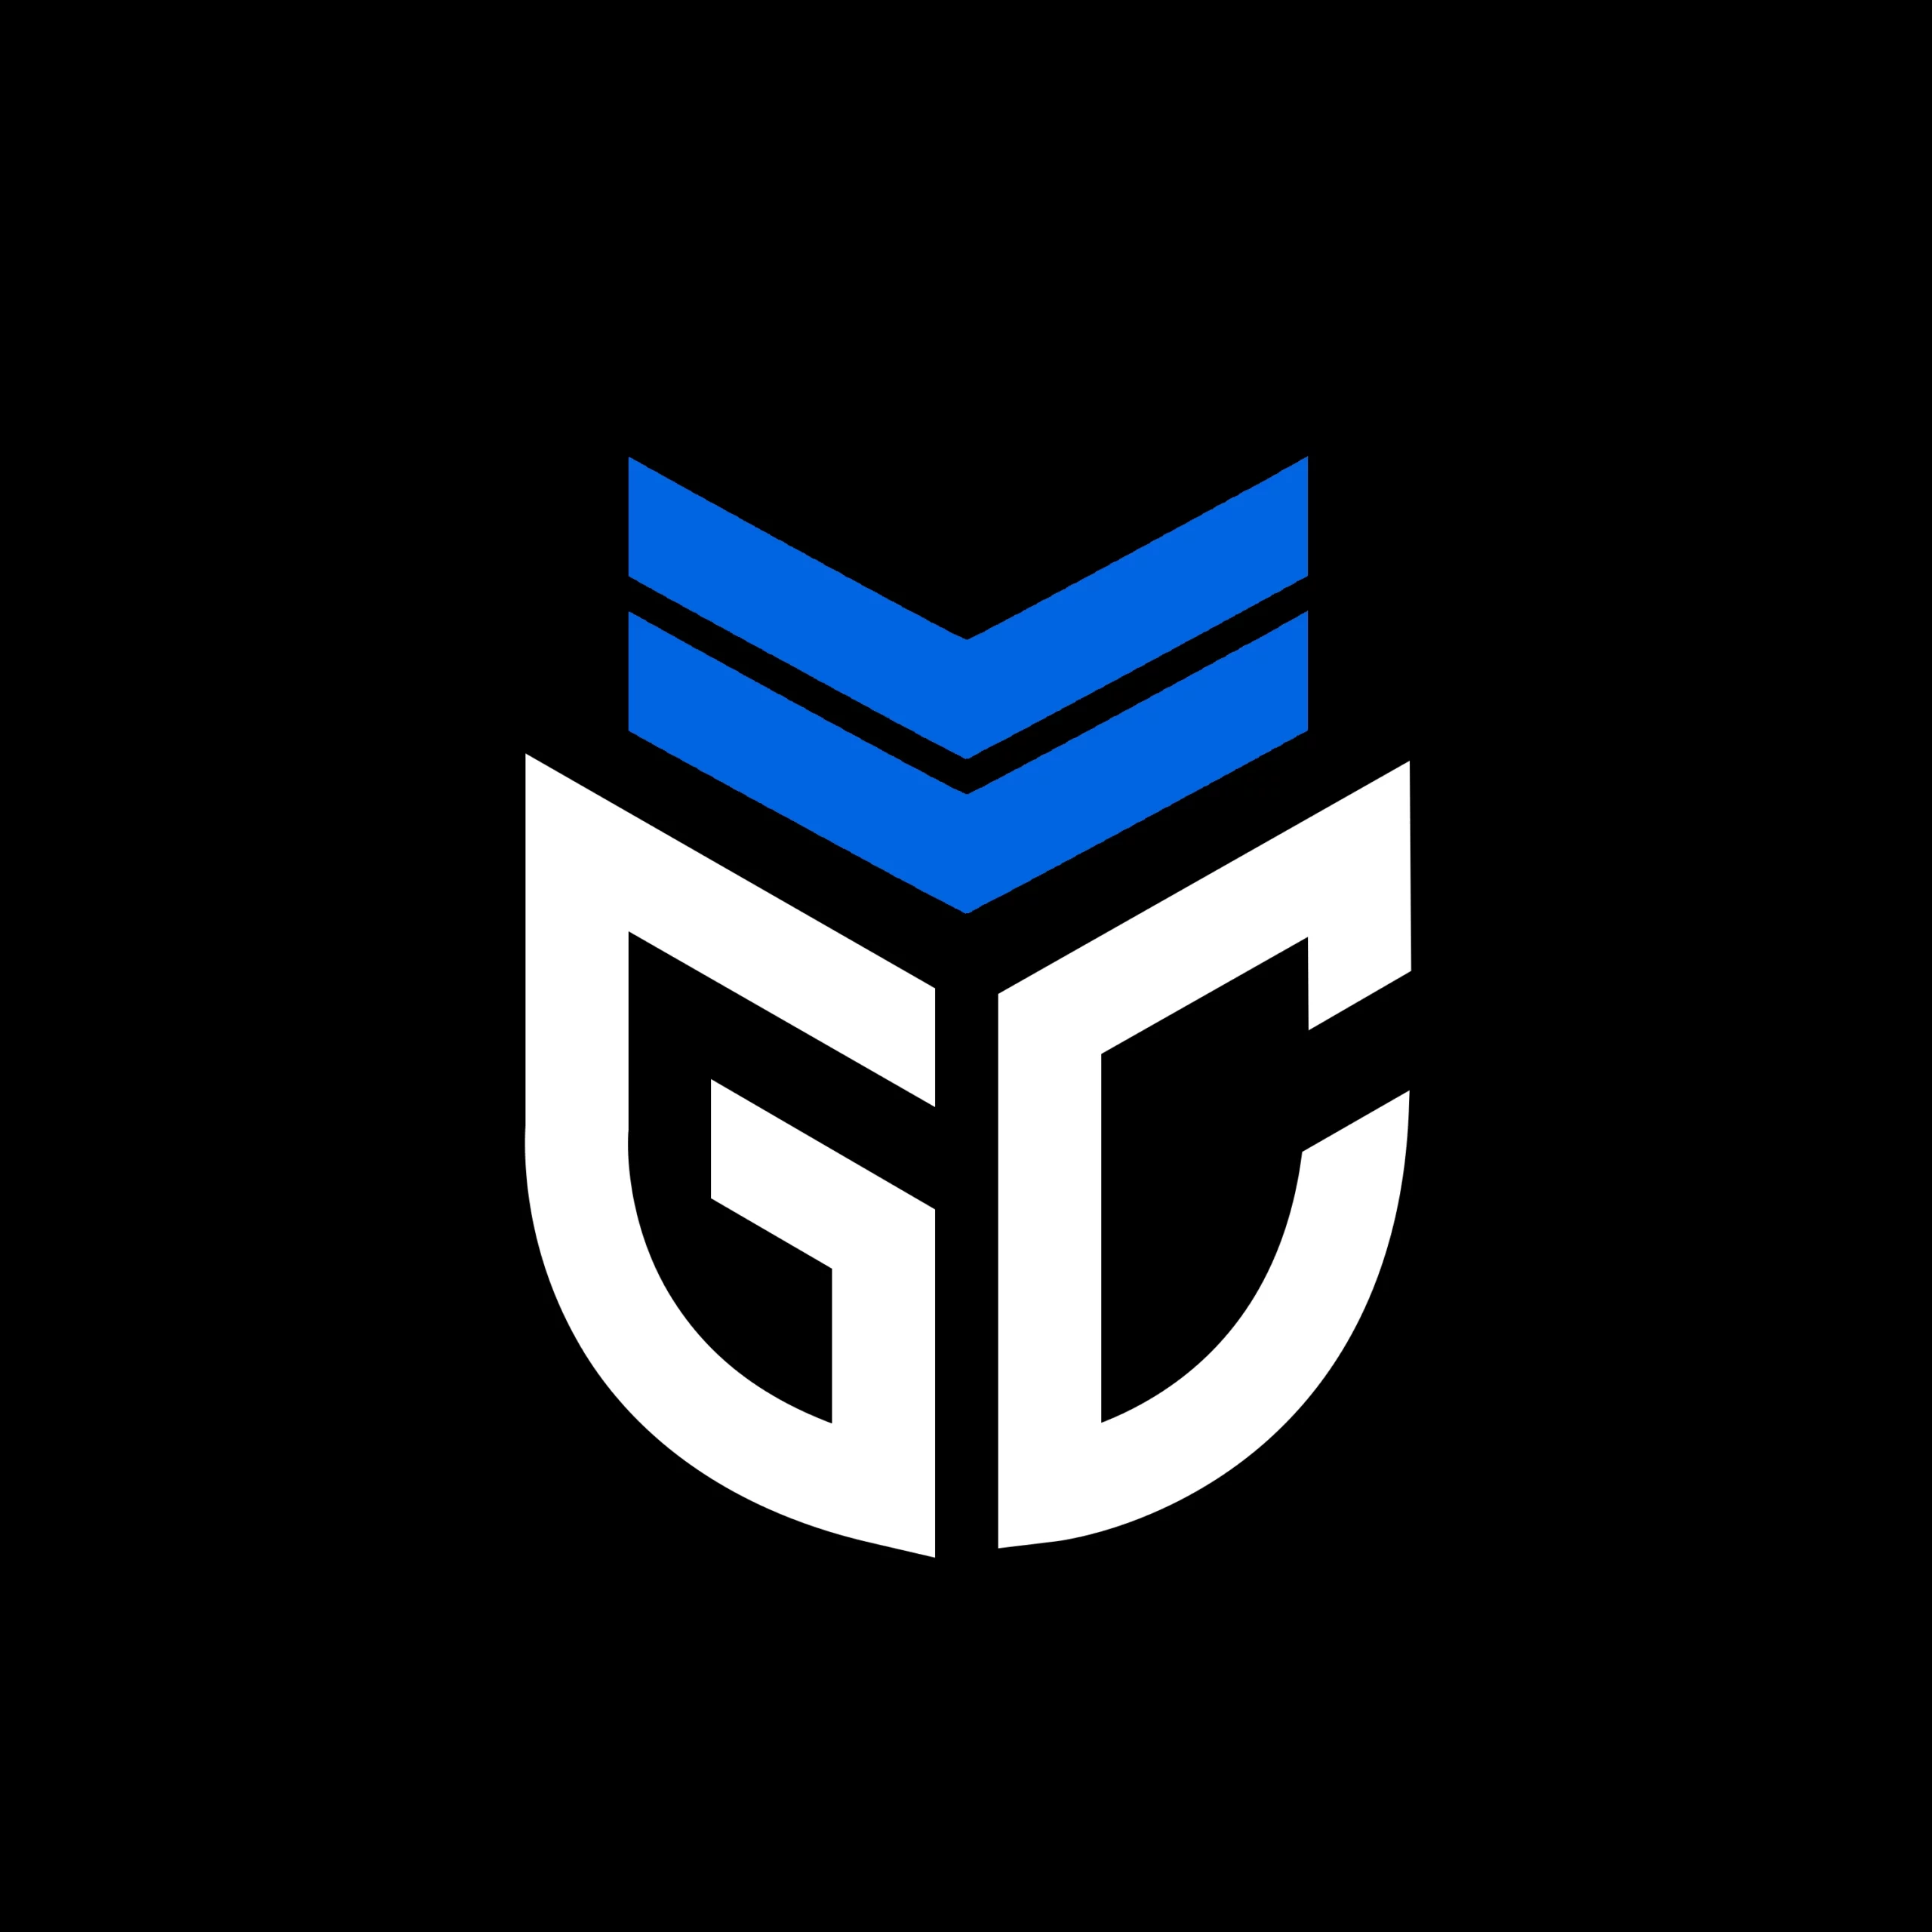 golu-classes-logo-in-black-background-image